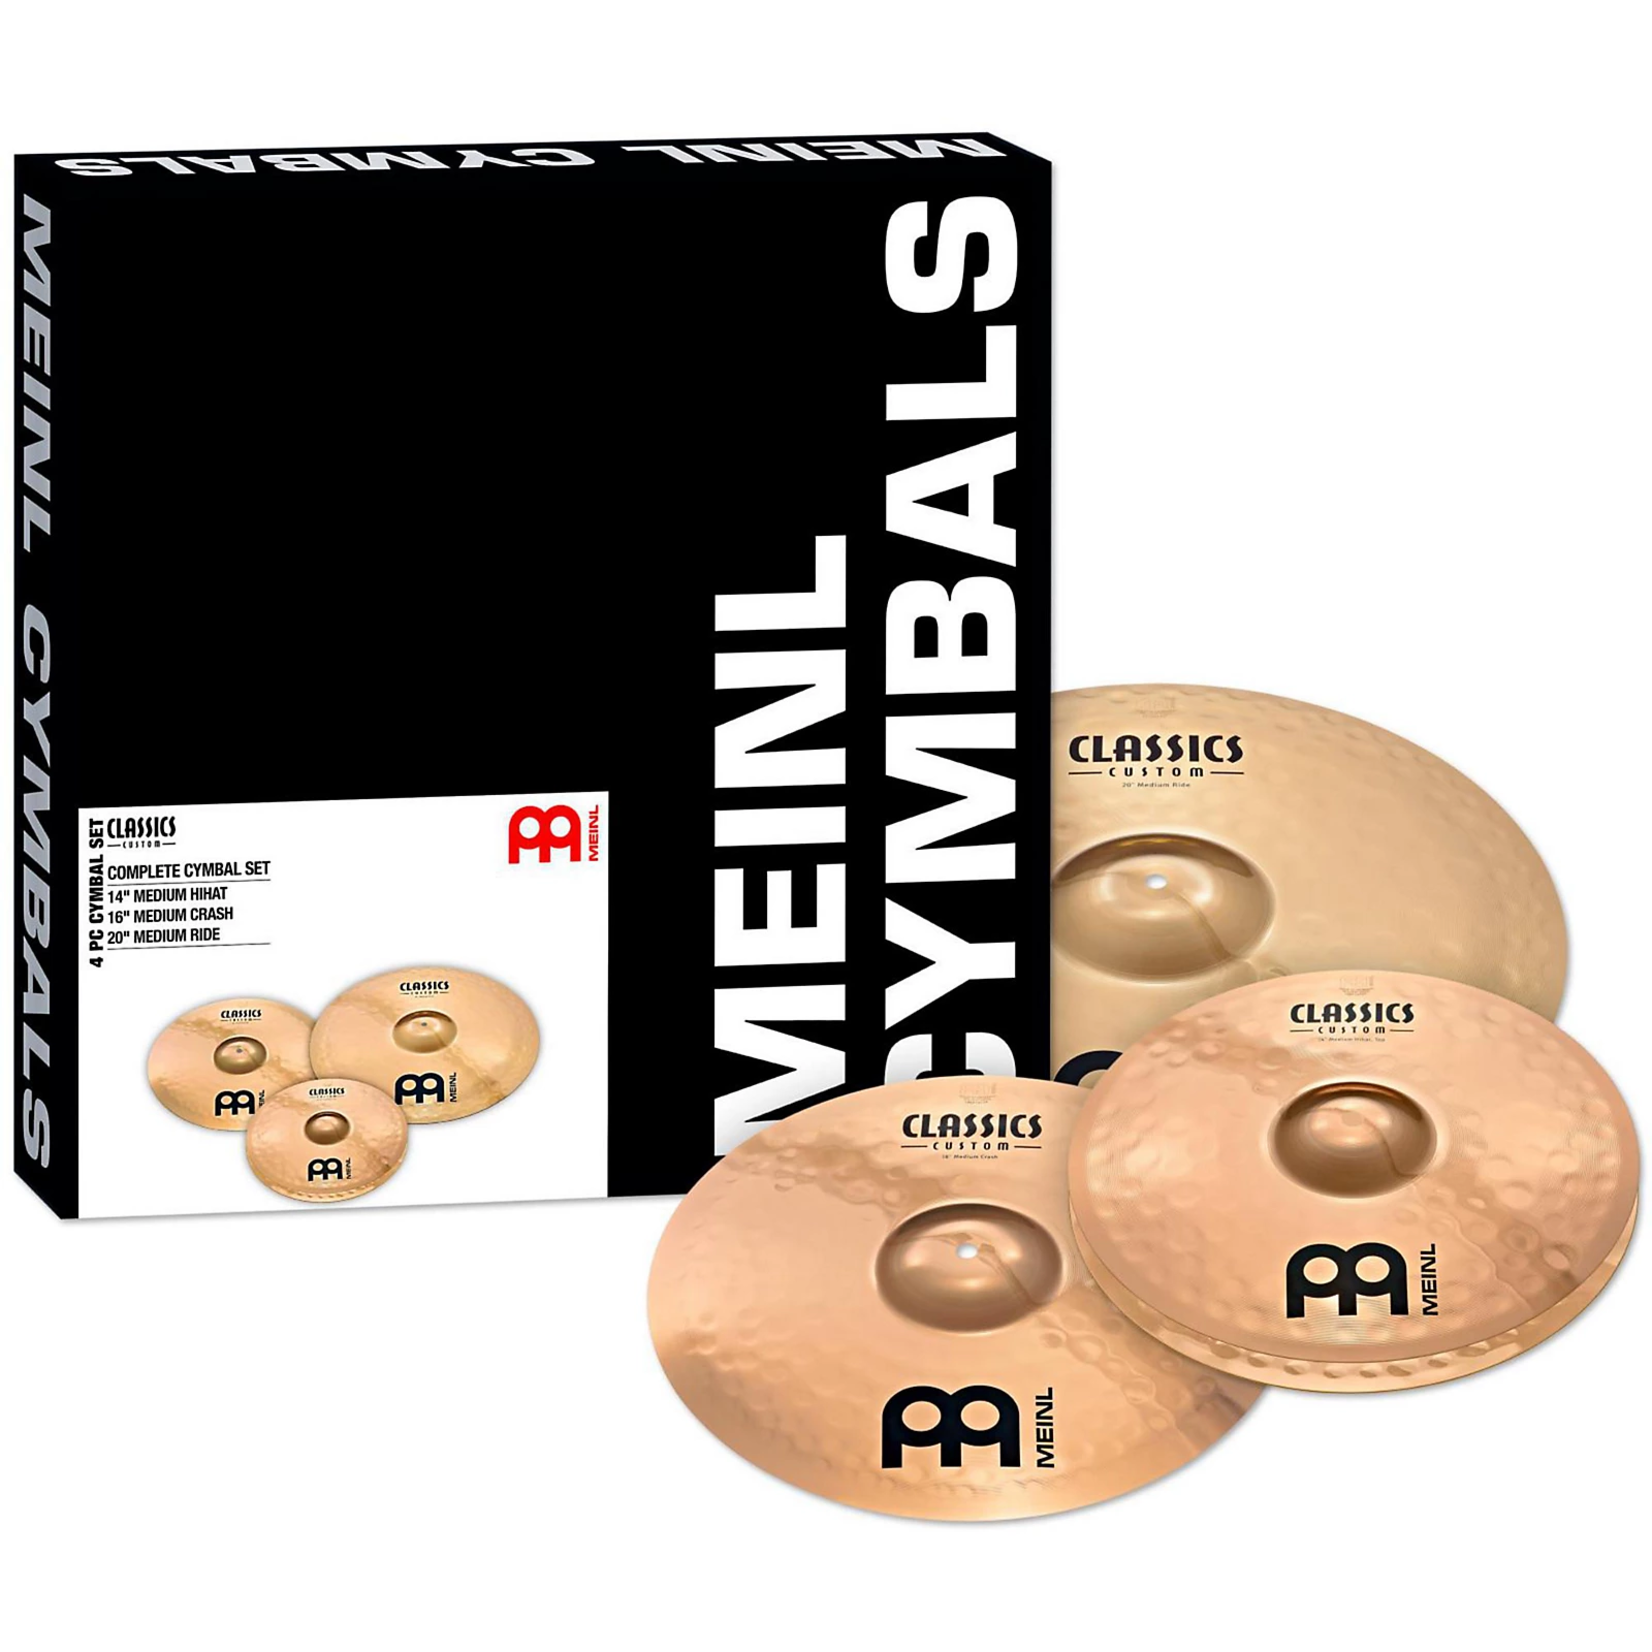 Meinl Meinl Classics Custom Brilliant Complete Cymbal Pack (all Medium) 20/16/14HH CC141620